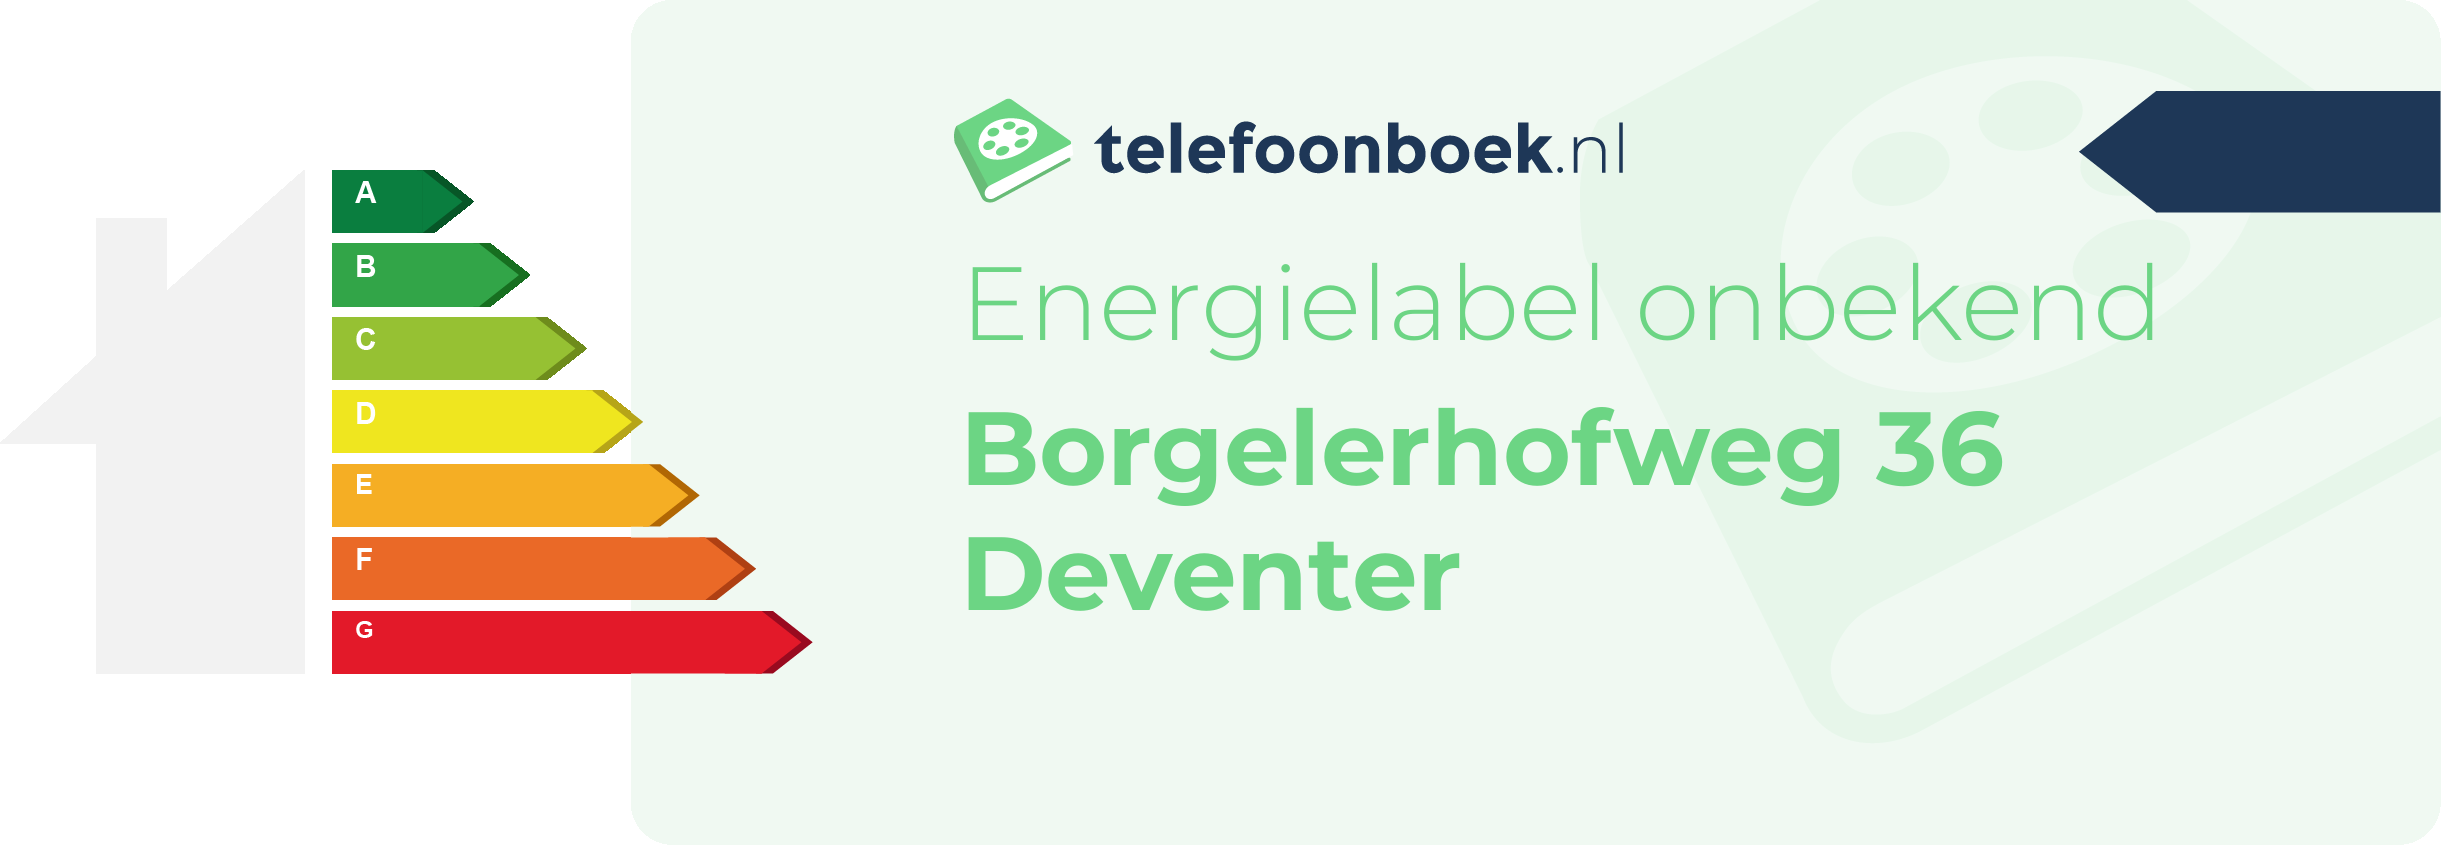 Energielabel Borgelerhofweg 36 Deventer